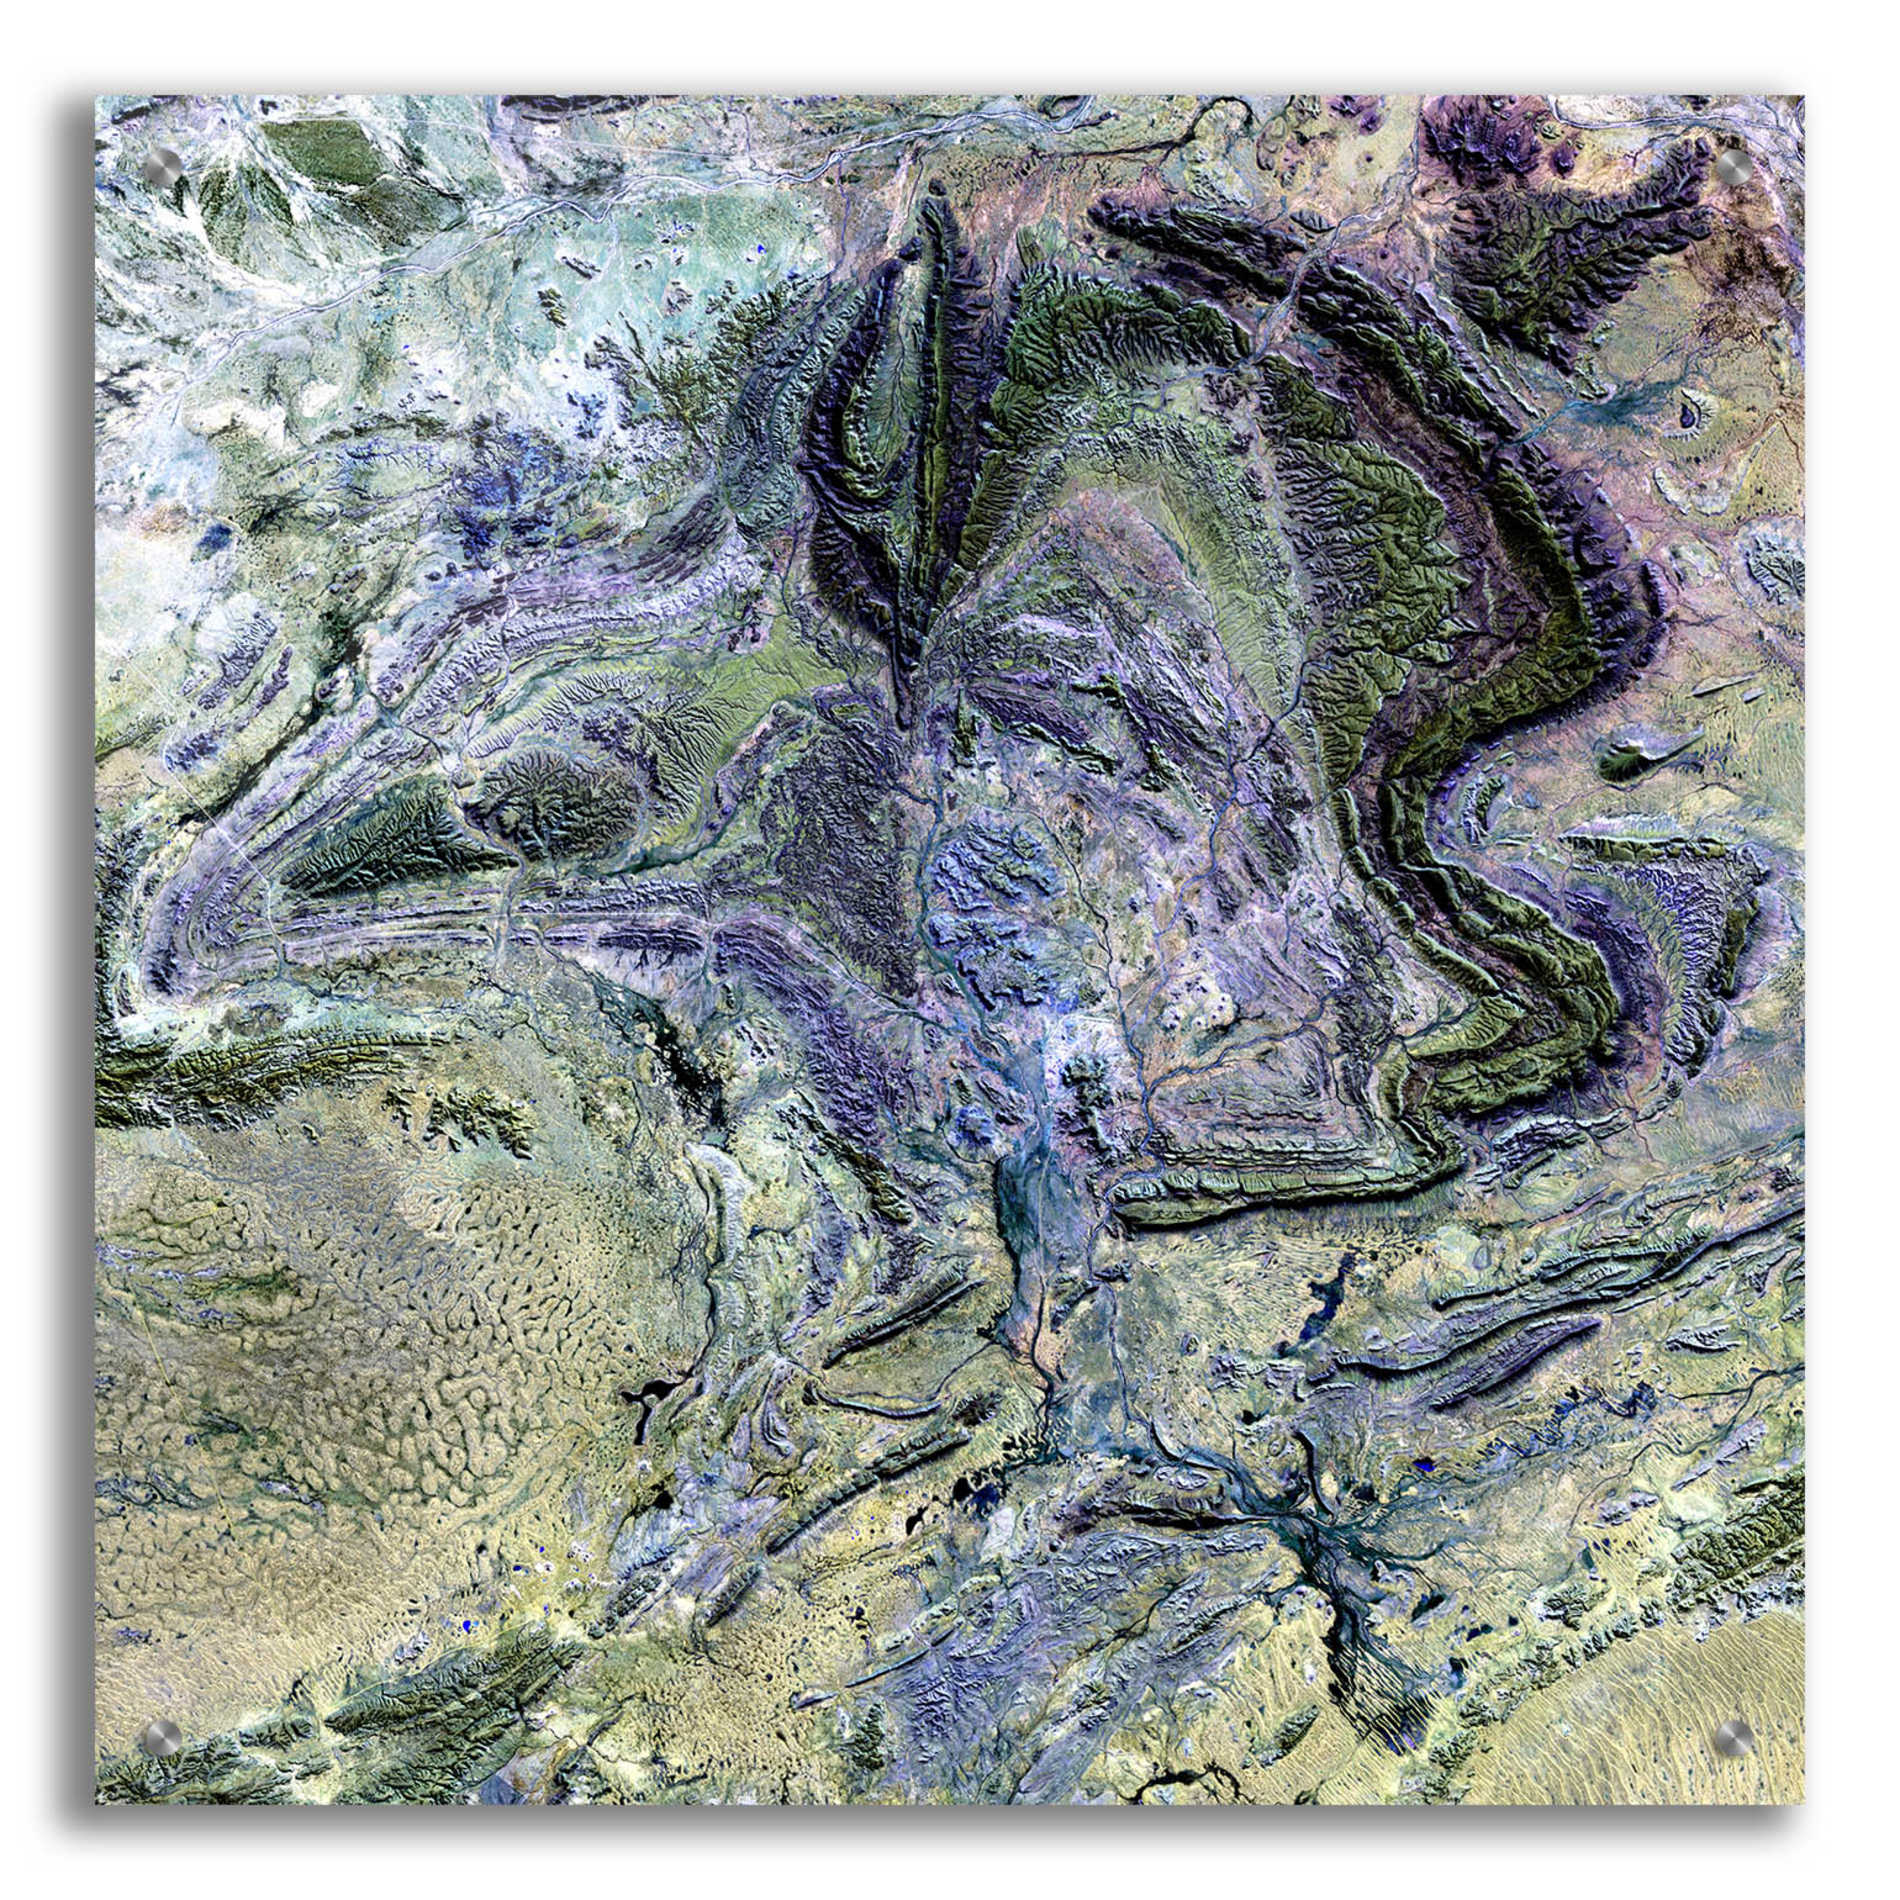 Epic Art 'Earth as Art: MacDonnel Ranges' Acrylic Glass Wall Art,24x24